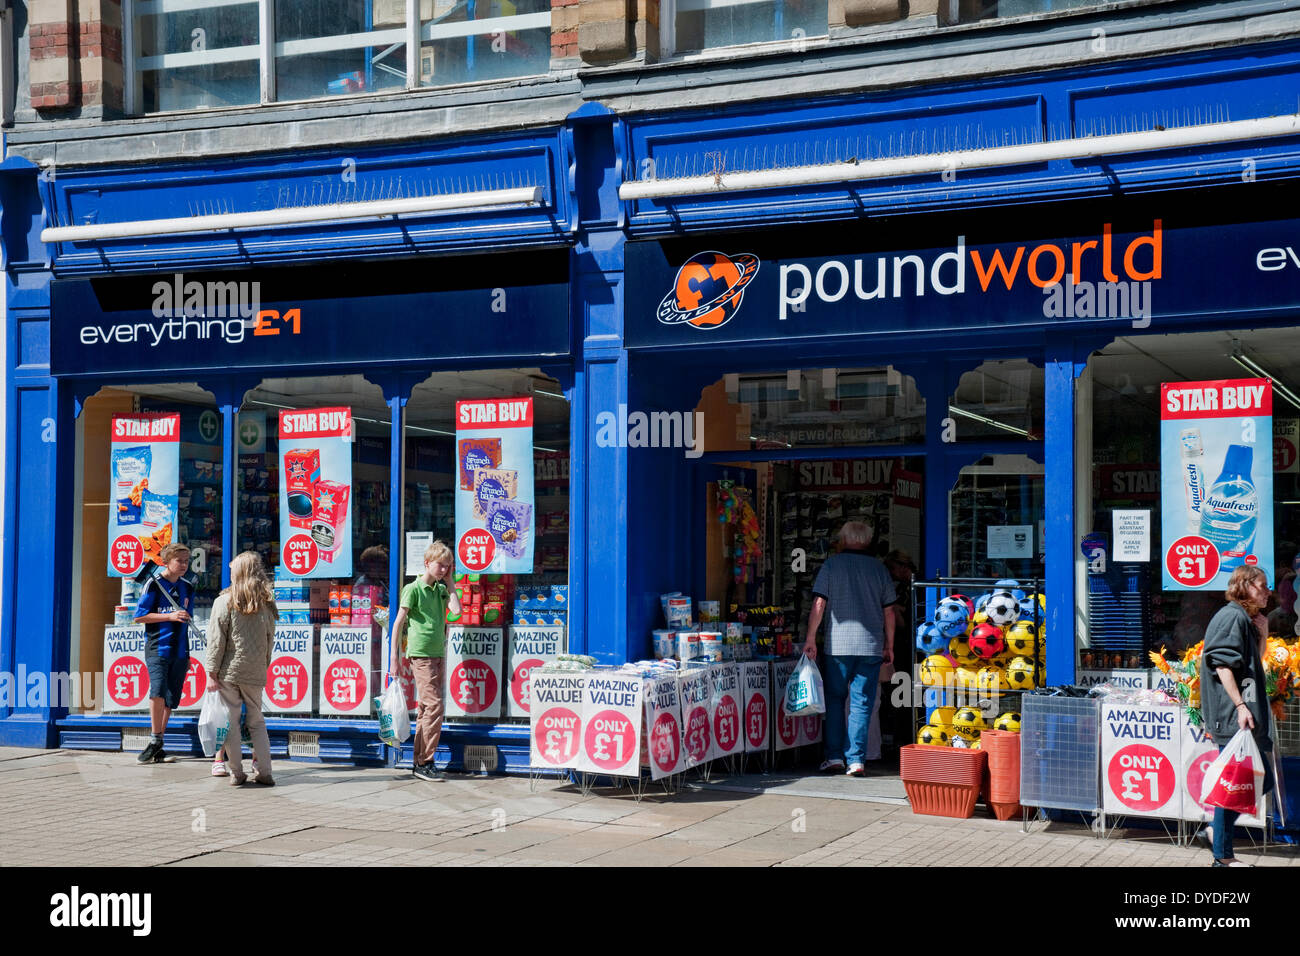 Poundworld shopfront. Stock Photo